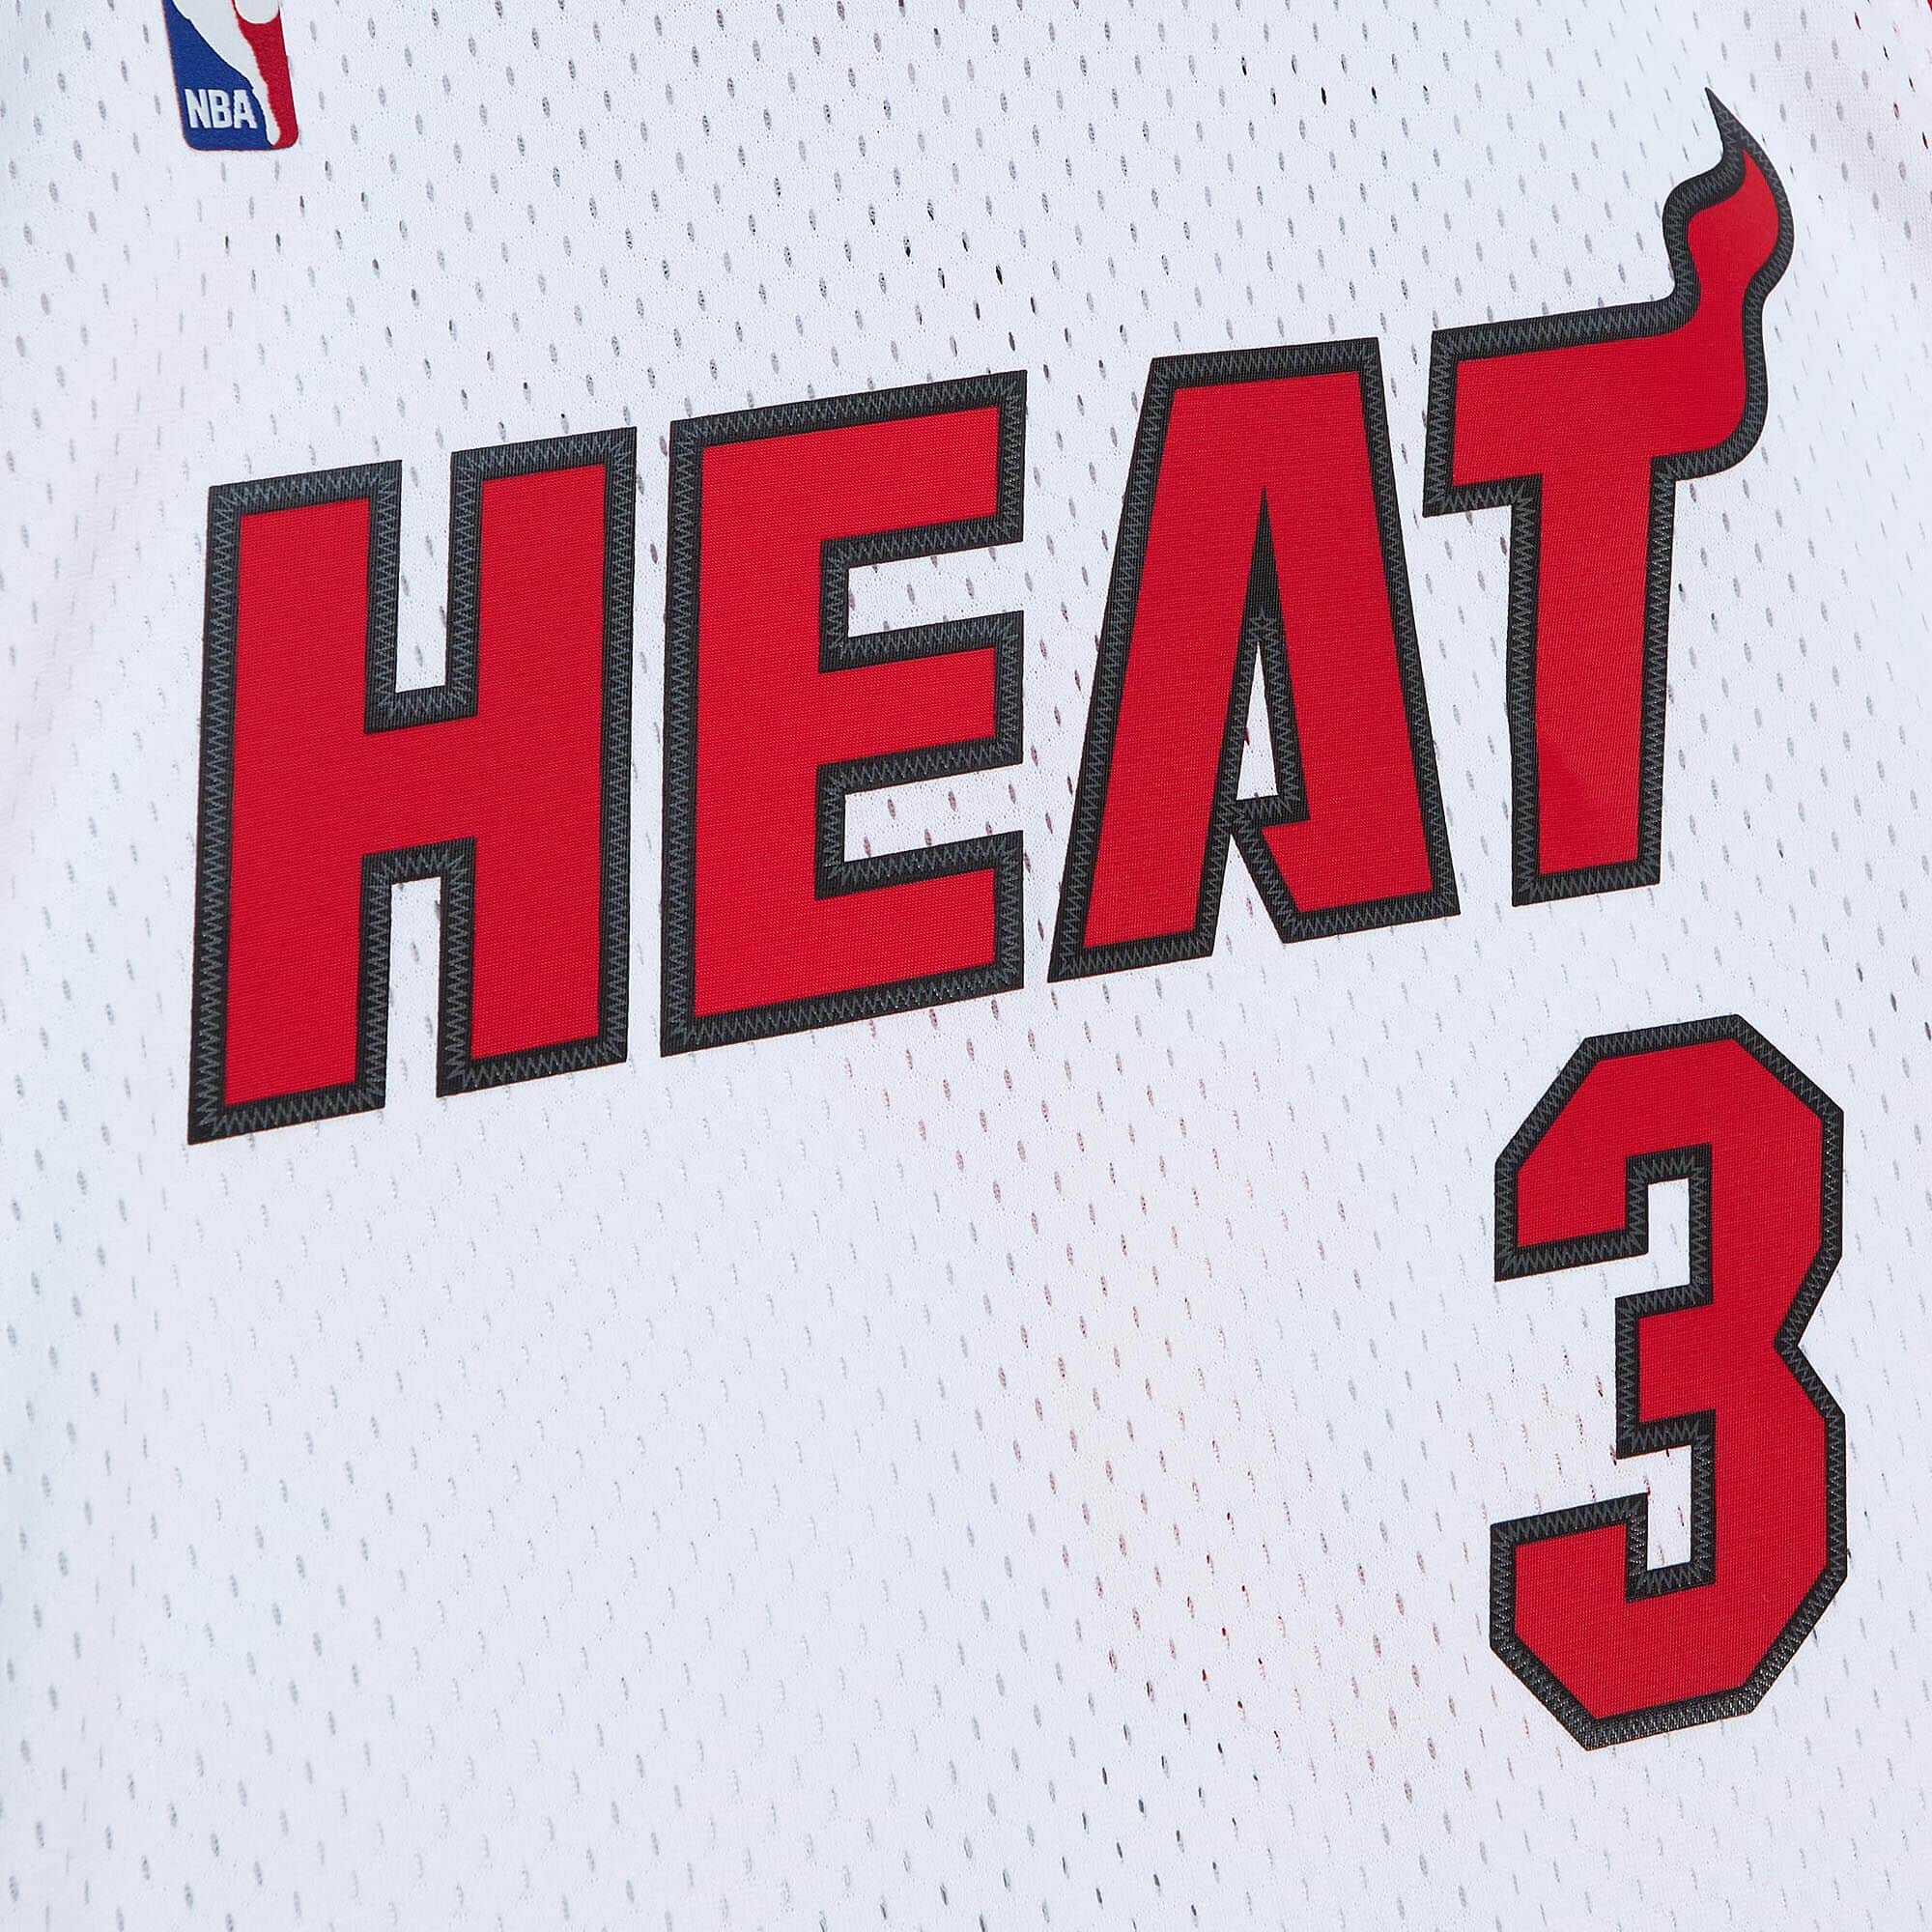 Adidas HWC NBA Miami Heat Chris Bosh Basketball Jersey